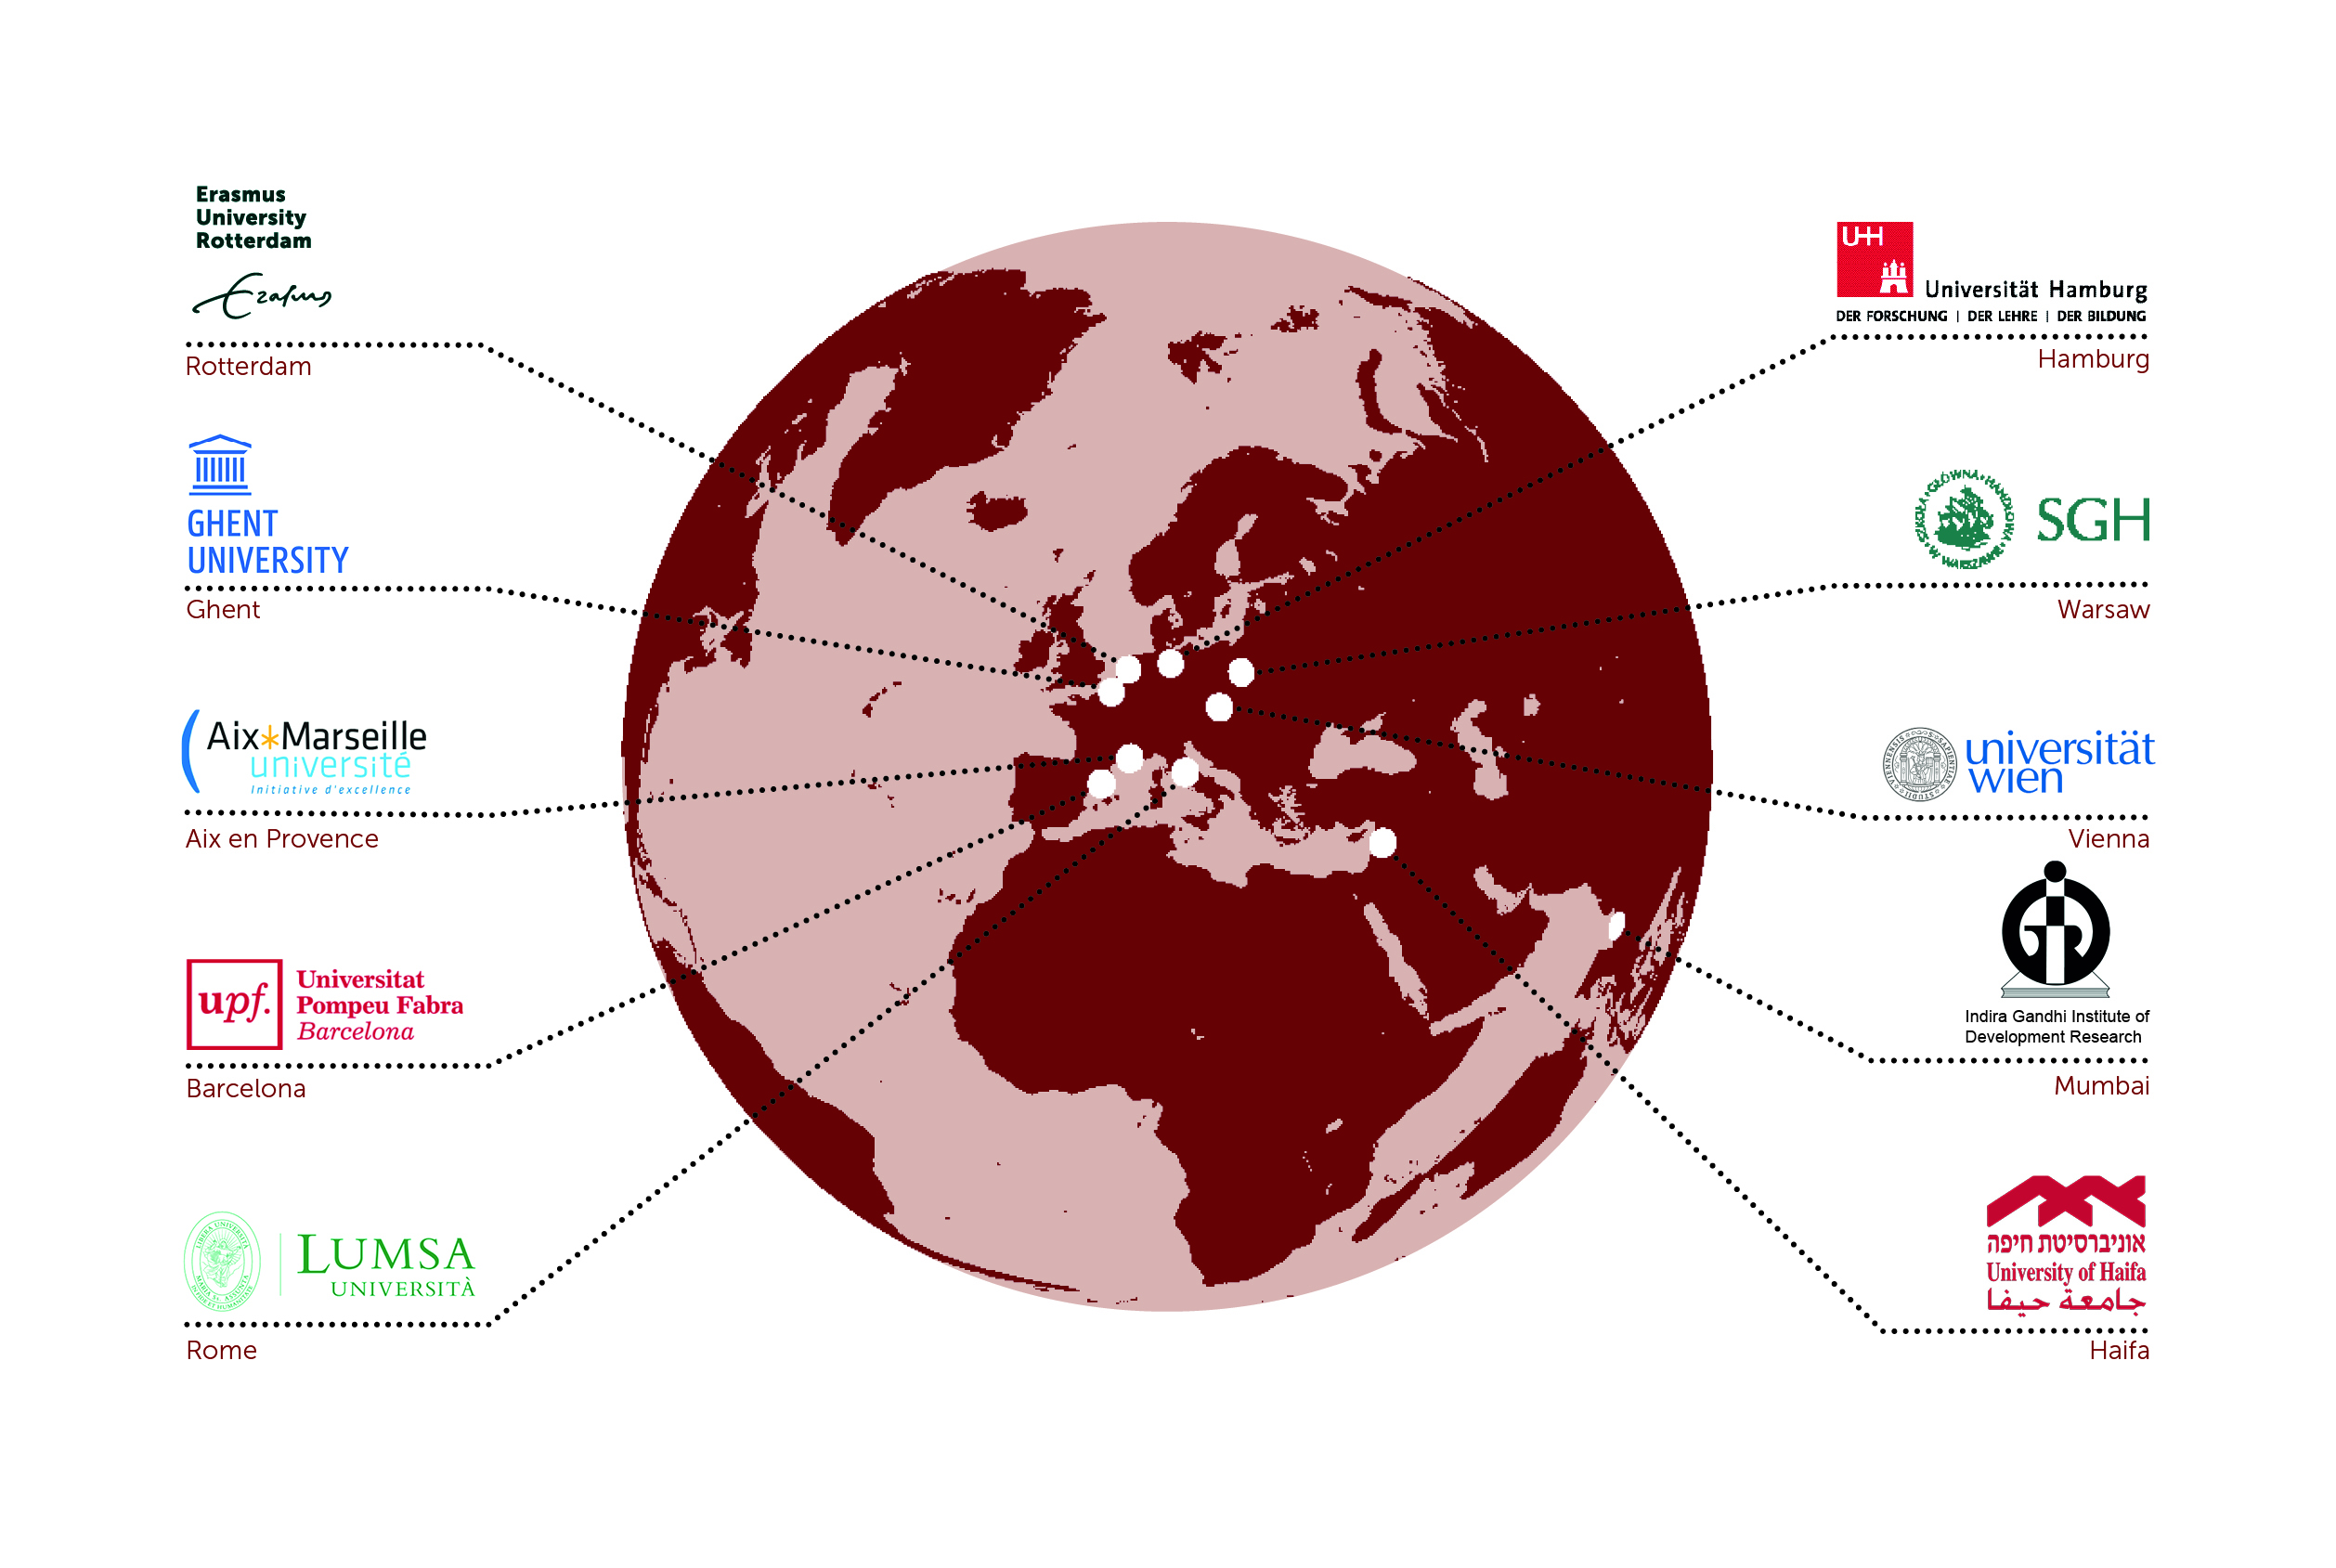 Interactive world globe showing the EMLE universities